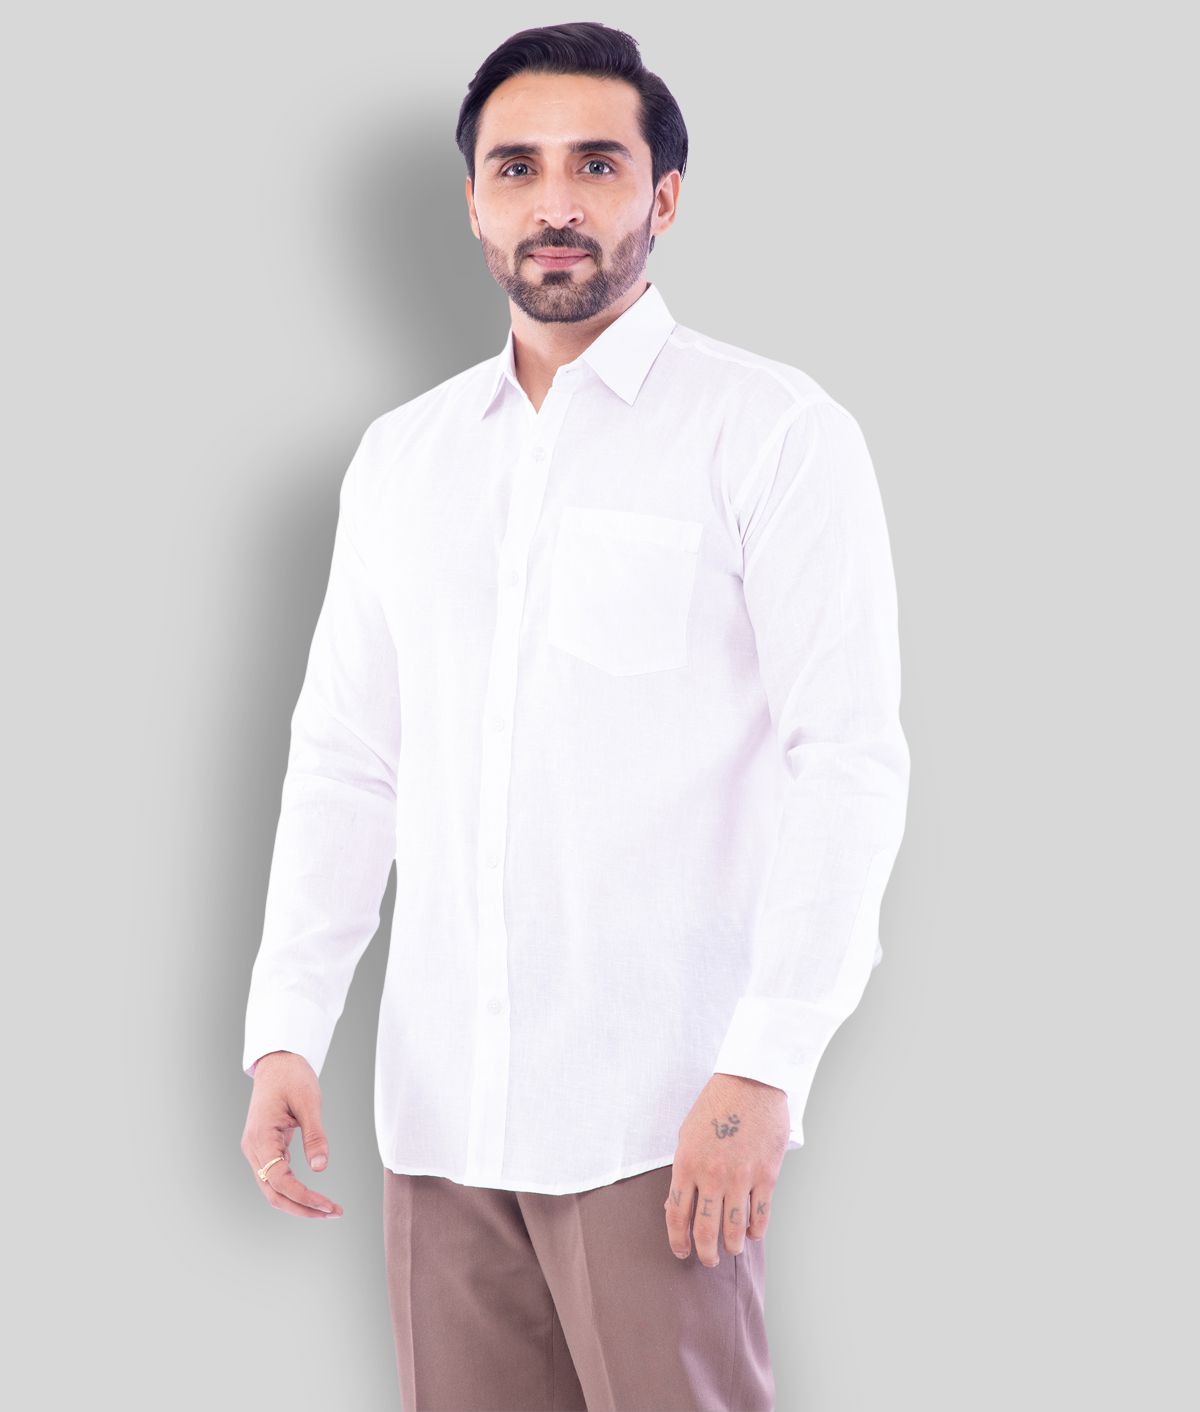     			DESHBANDHU DBK - White Cotton Regular Fit Men's Casual Shirt (Pack of 1 )